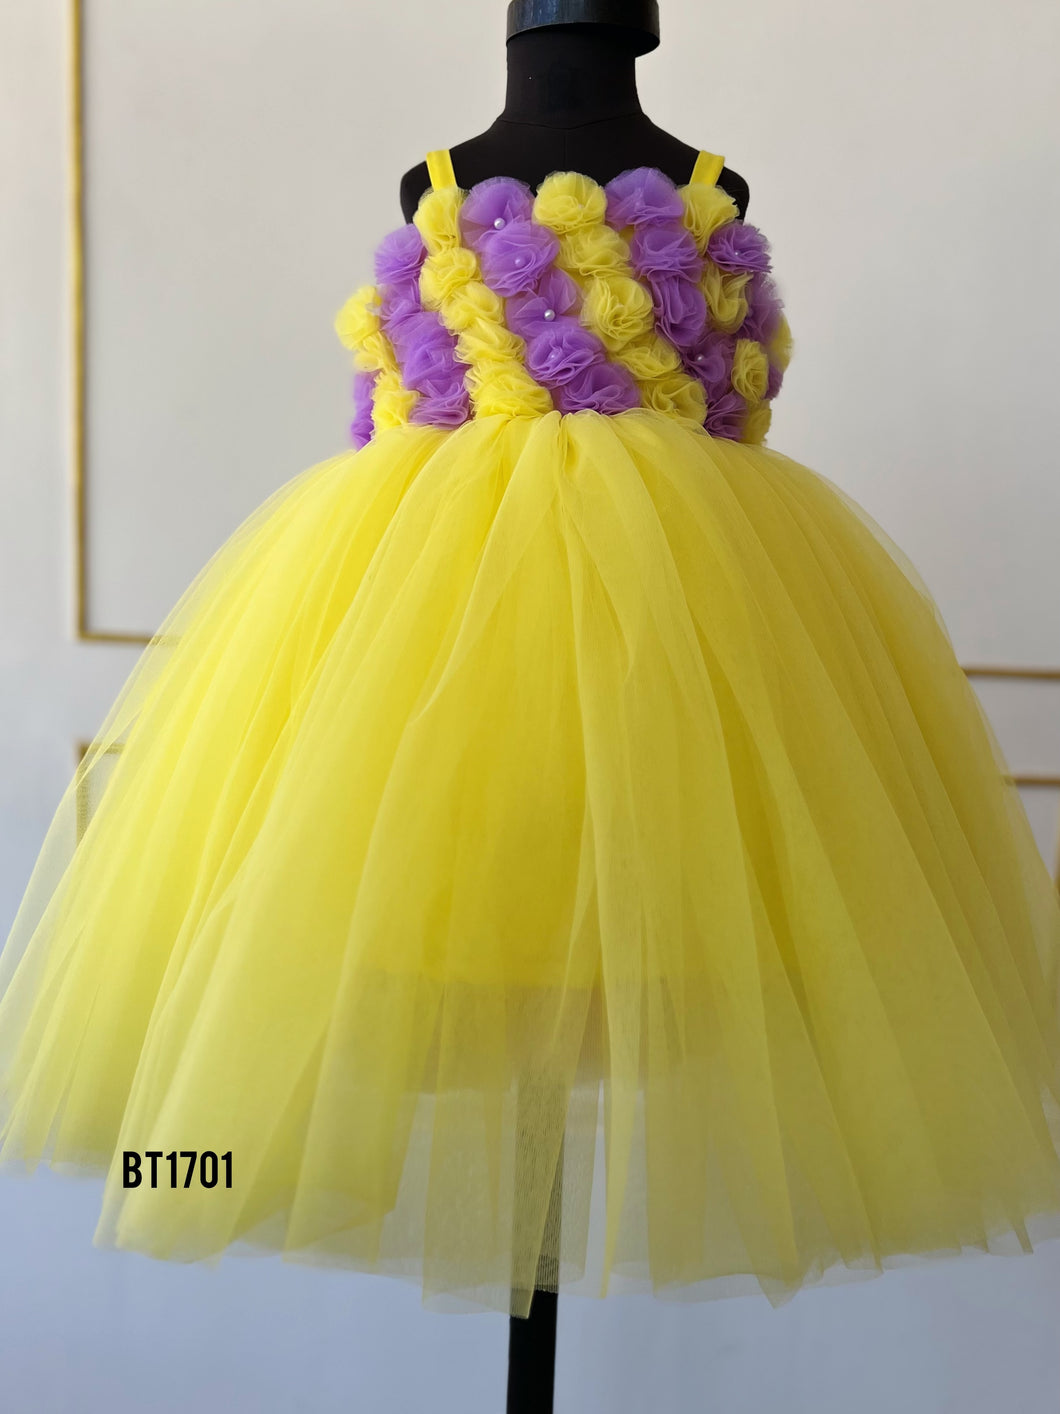 BT1701 Sunshine & Lavender Blooms Dress - The Essence of Joy